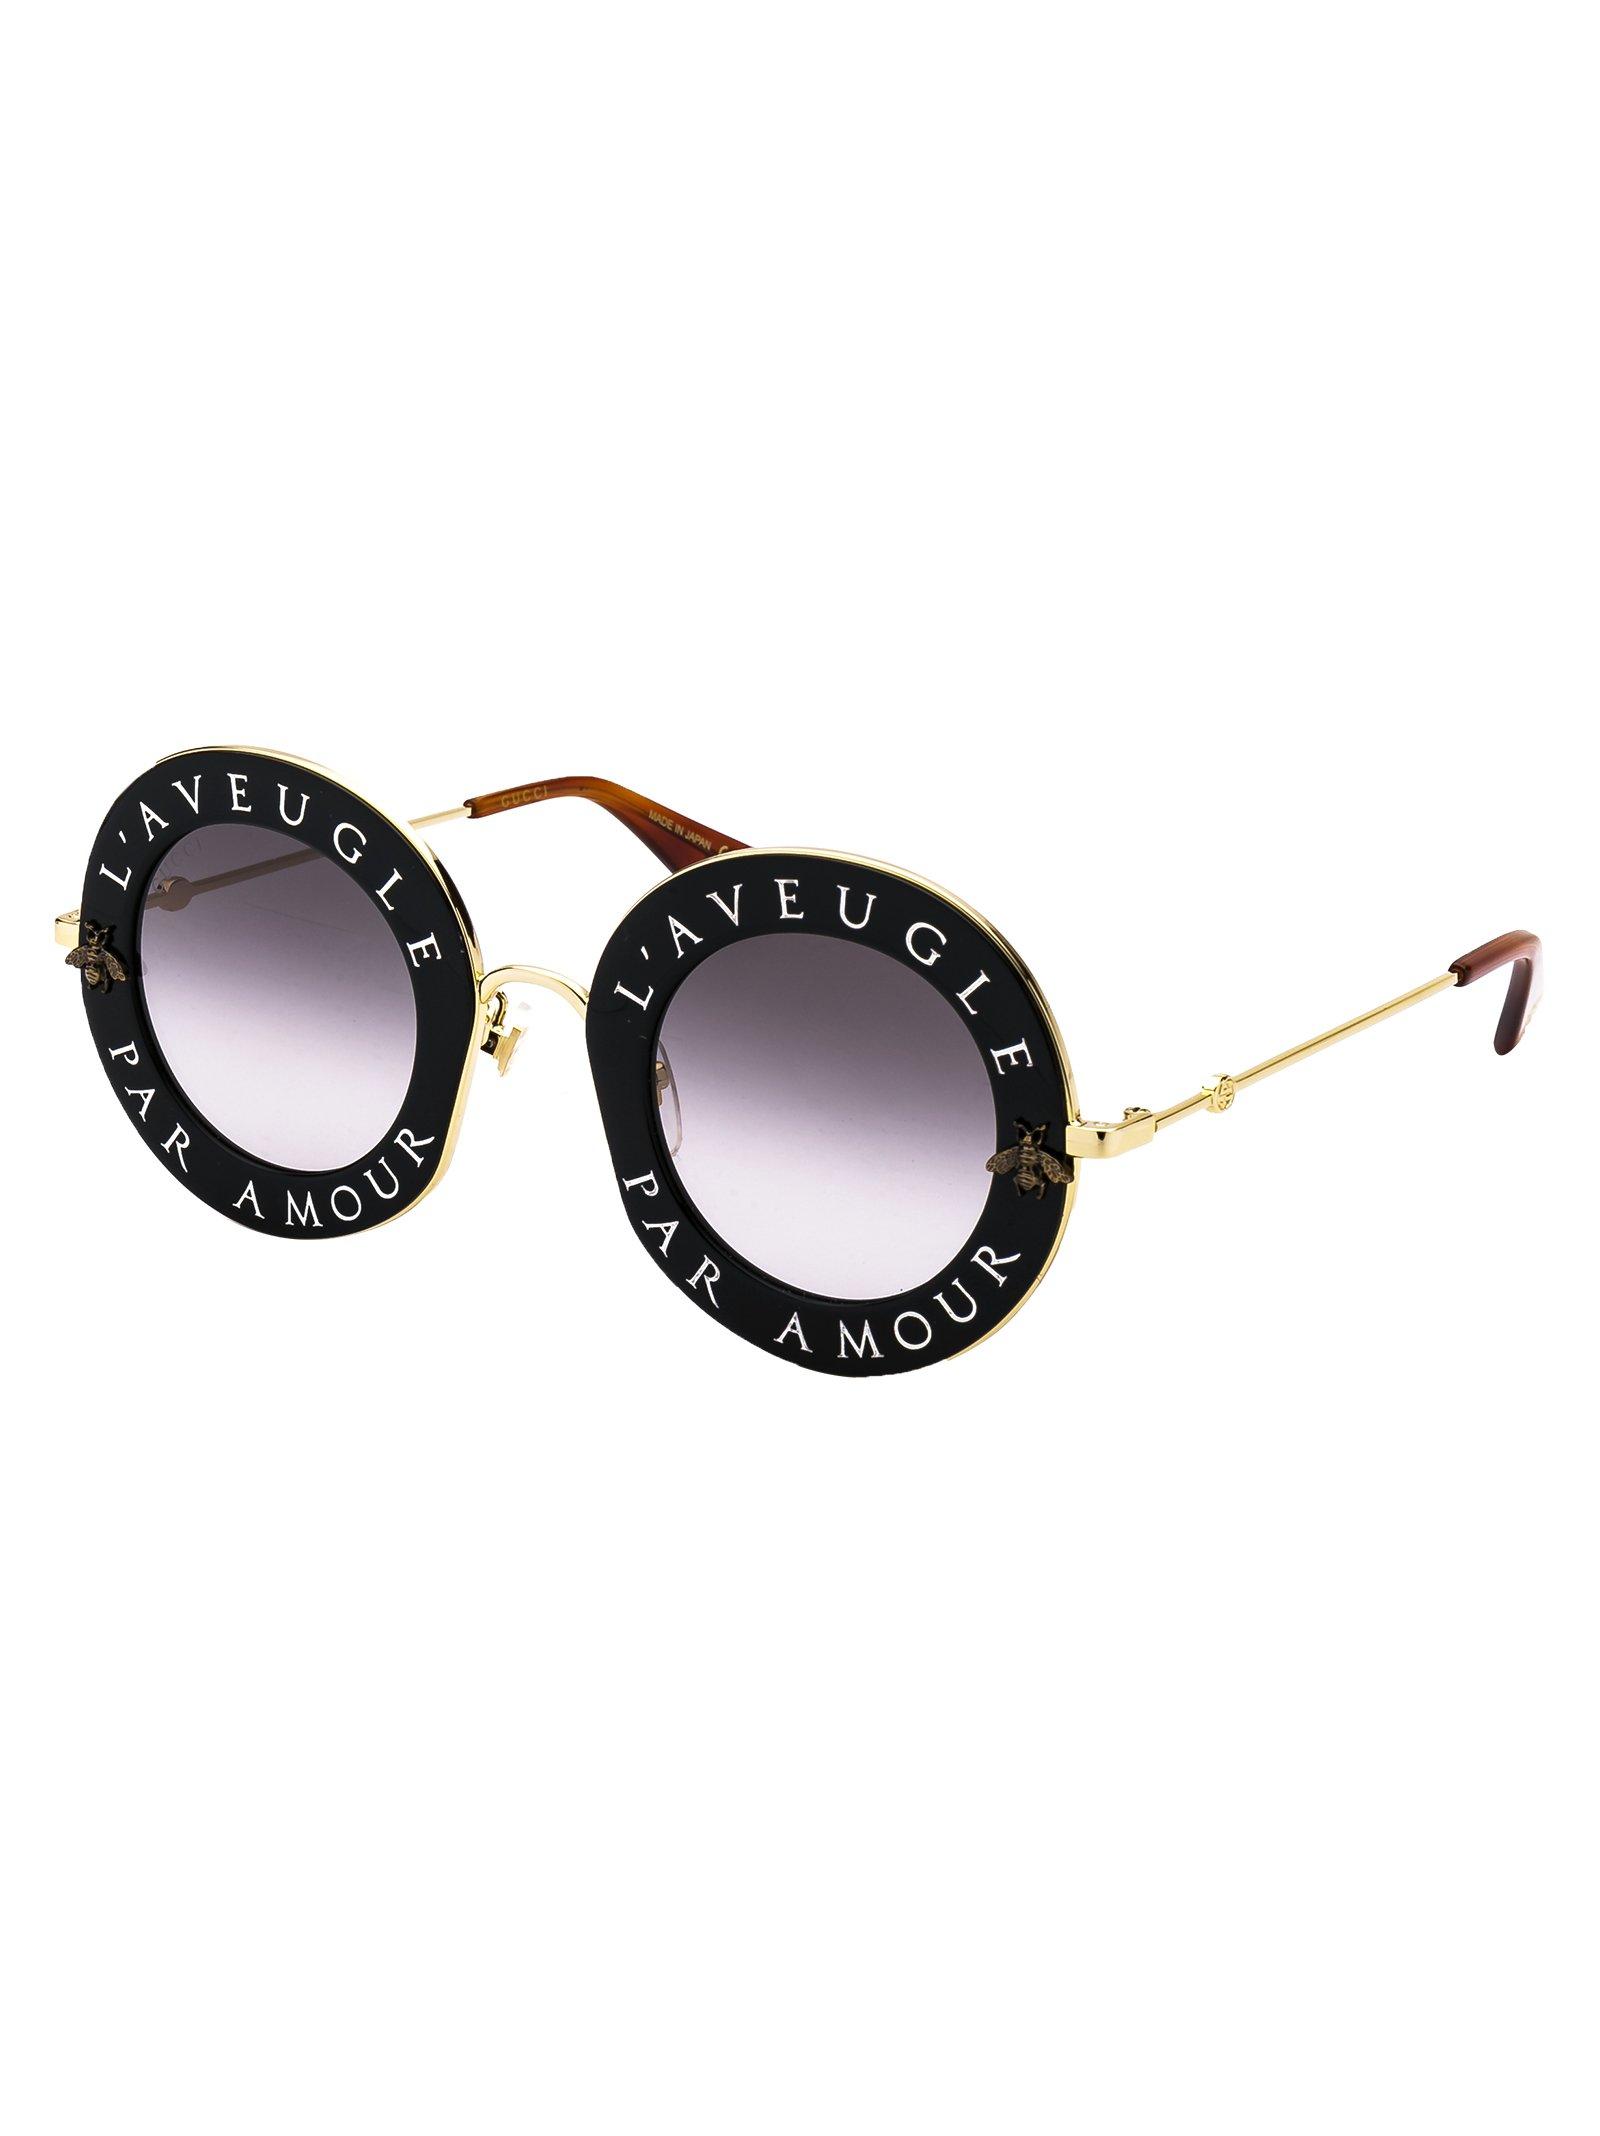 Gucci Slogan Printed Round Sunglasses in Black for Men - Lyst